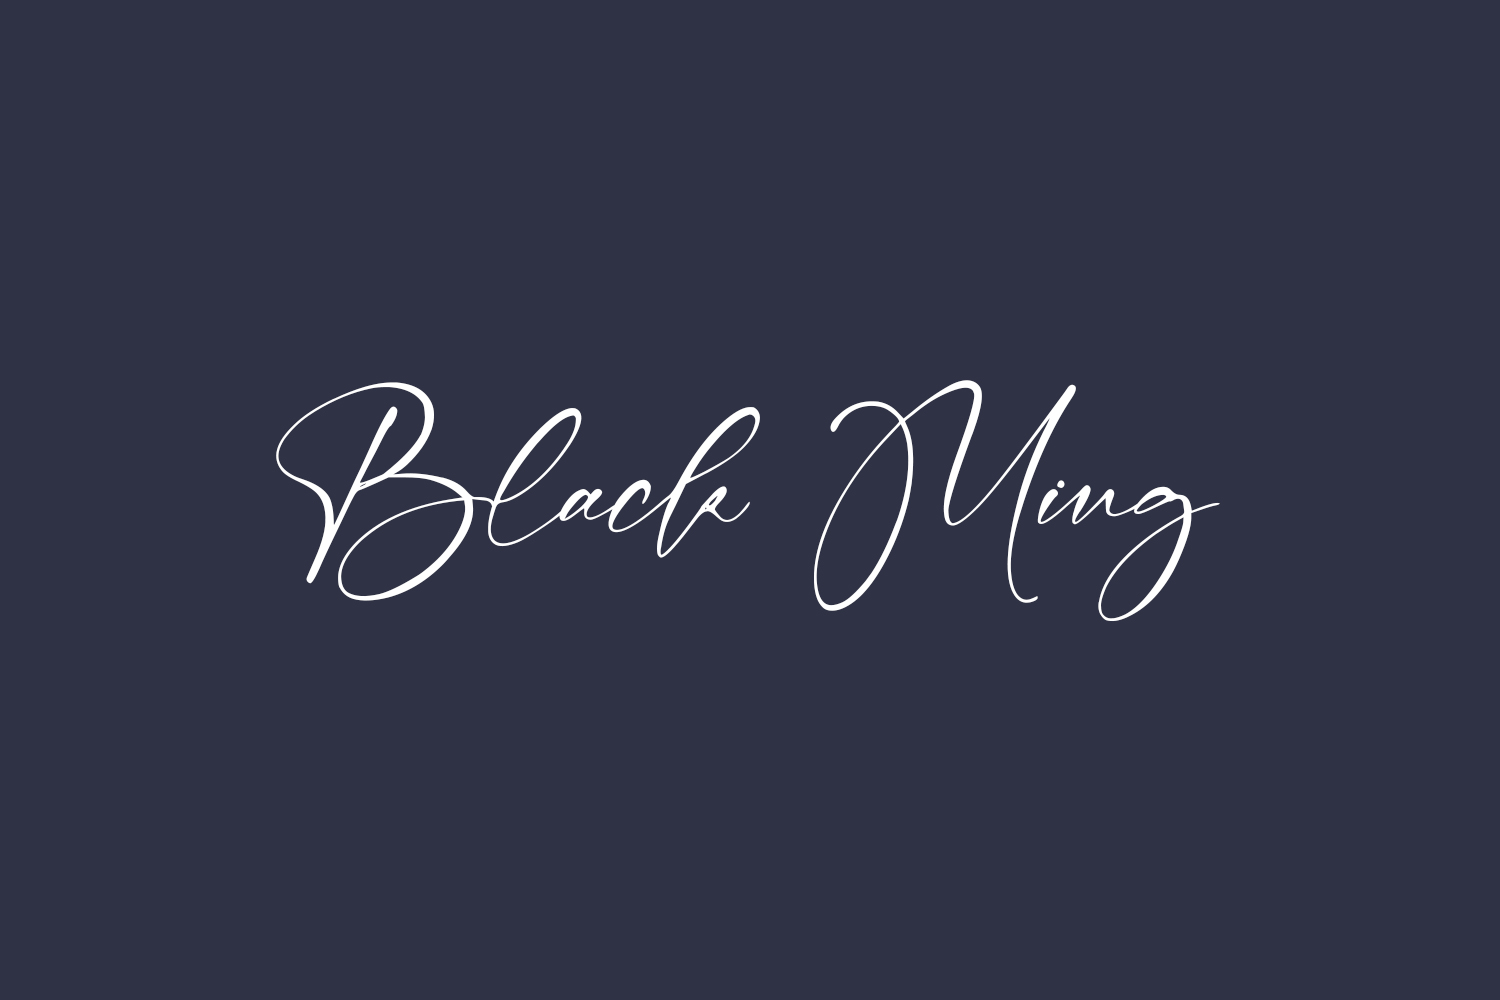 Black Ming Free Font